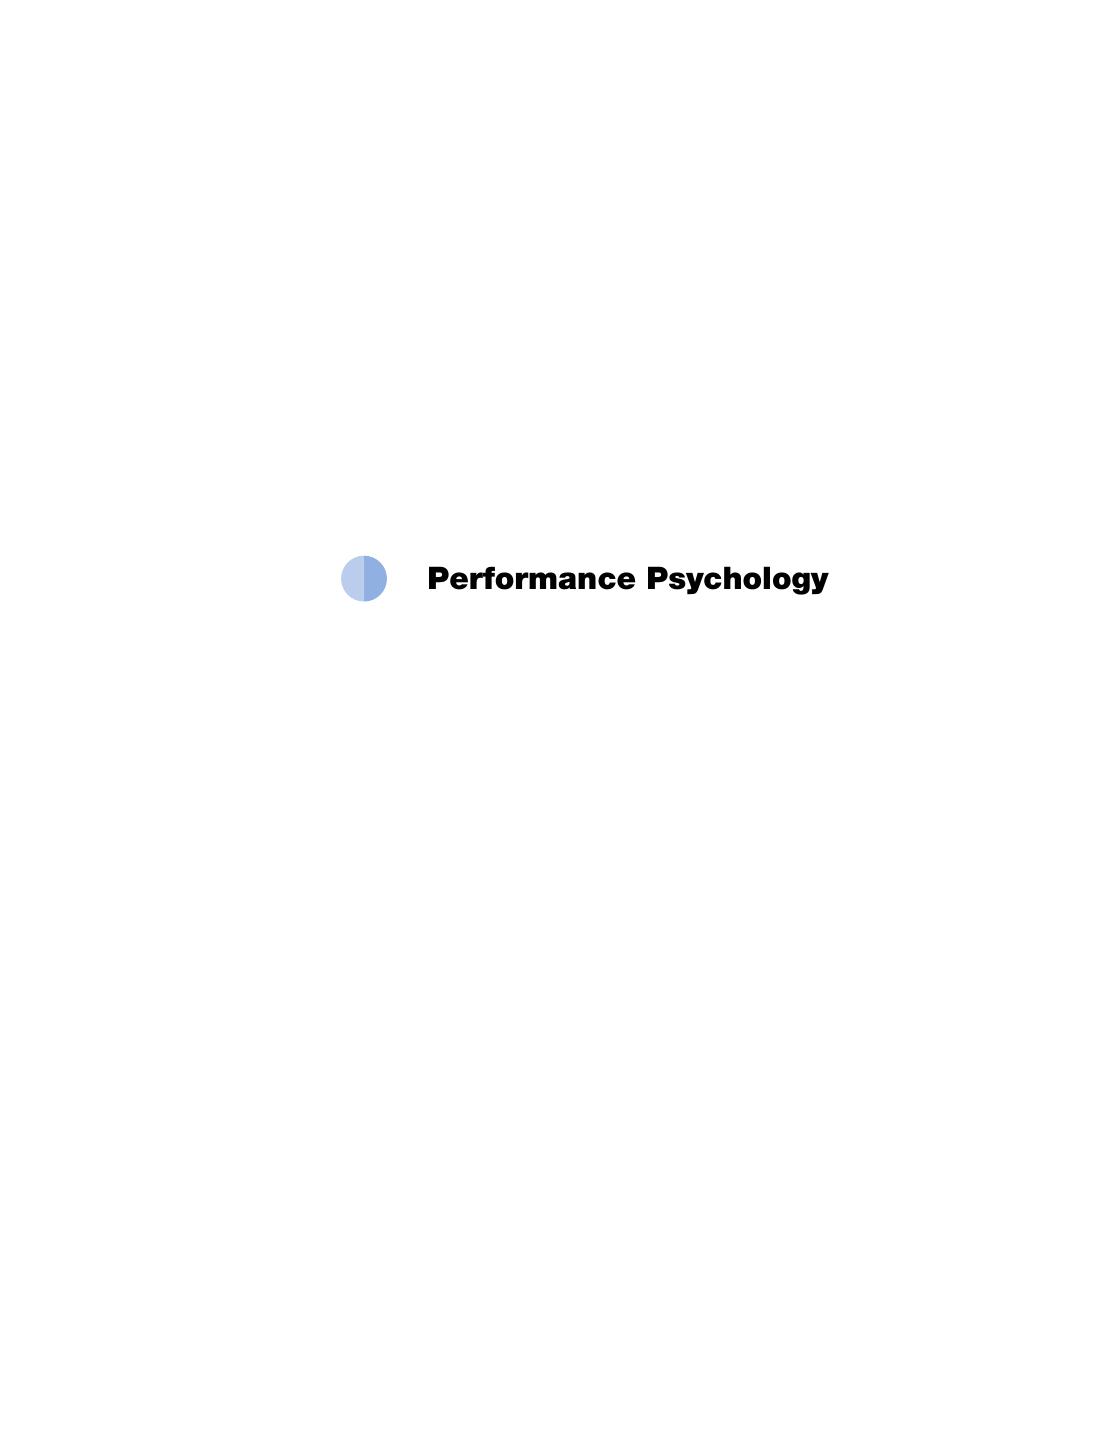 Performance Psychology 2011